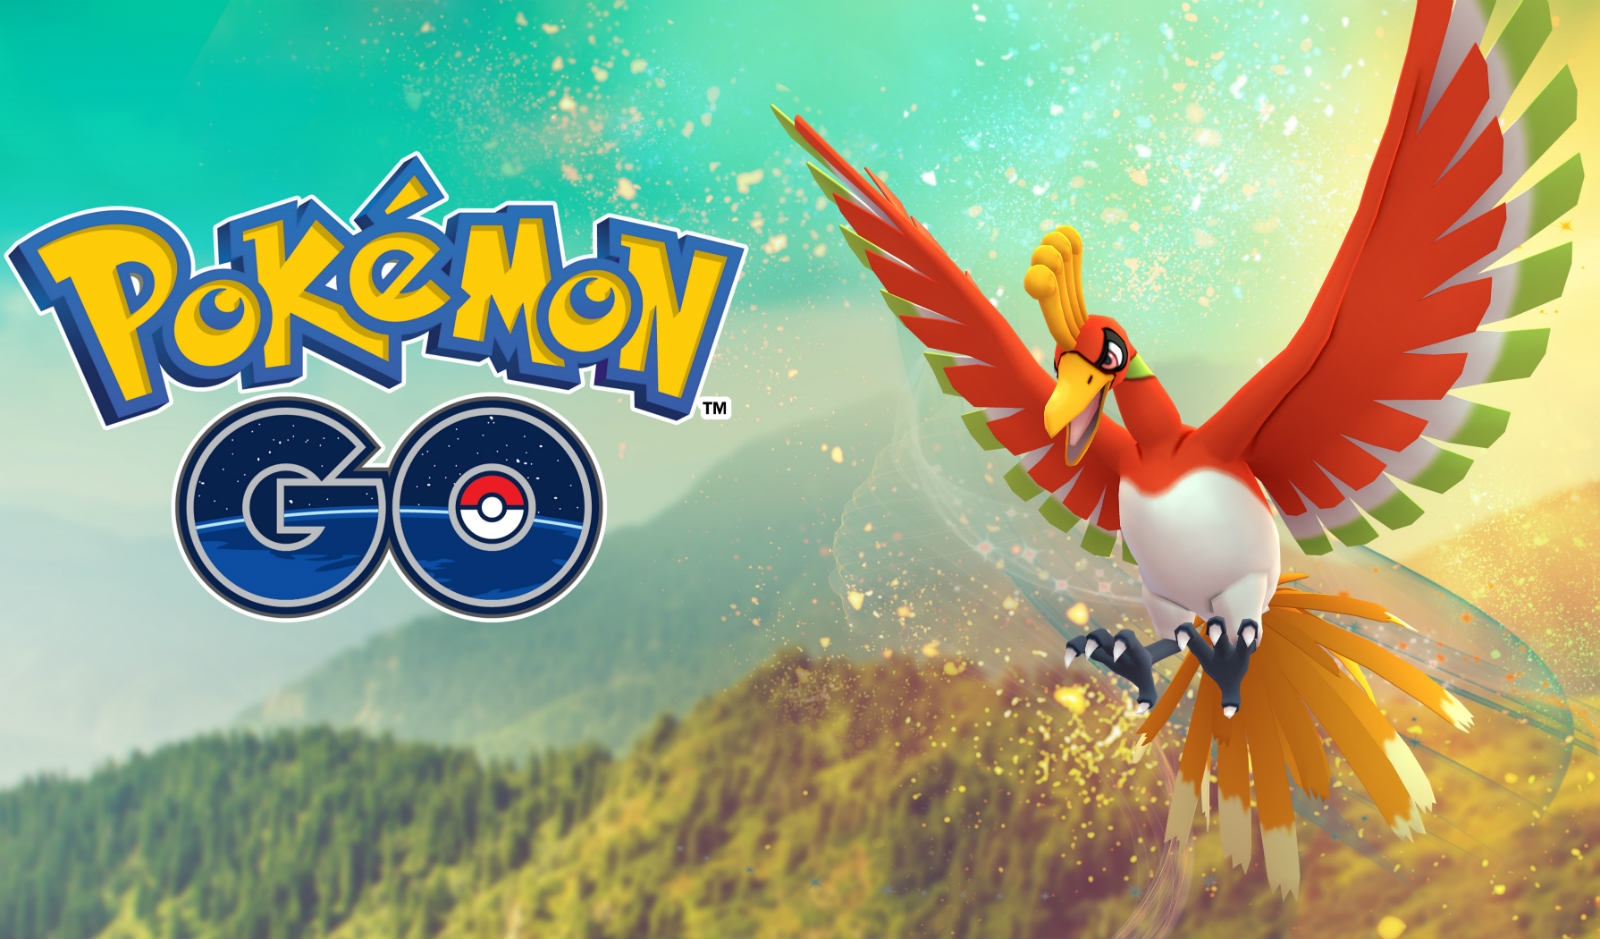 'Pokémon Go' legendary Ho-Oh is catchable for limited time | DeviceDaily.com